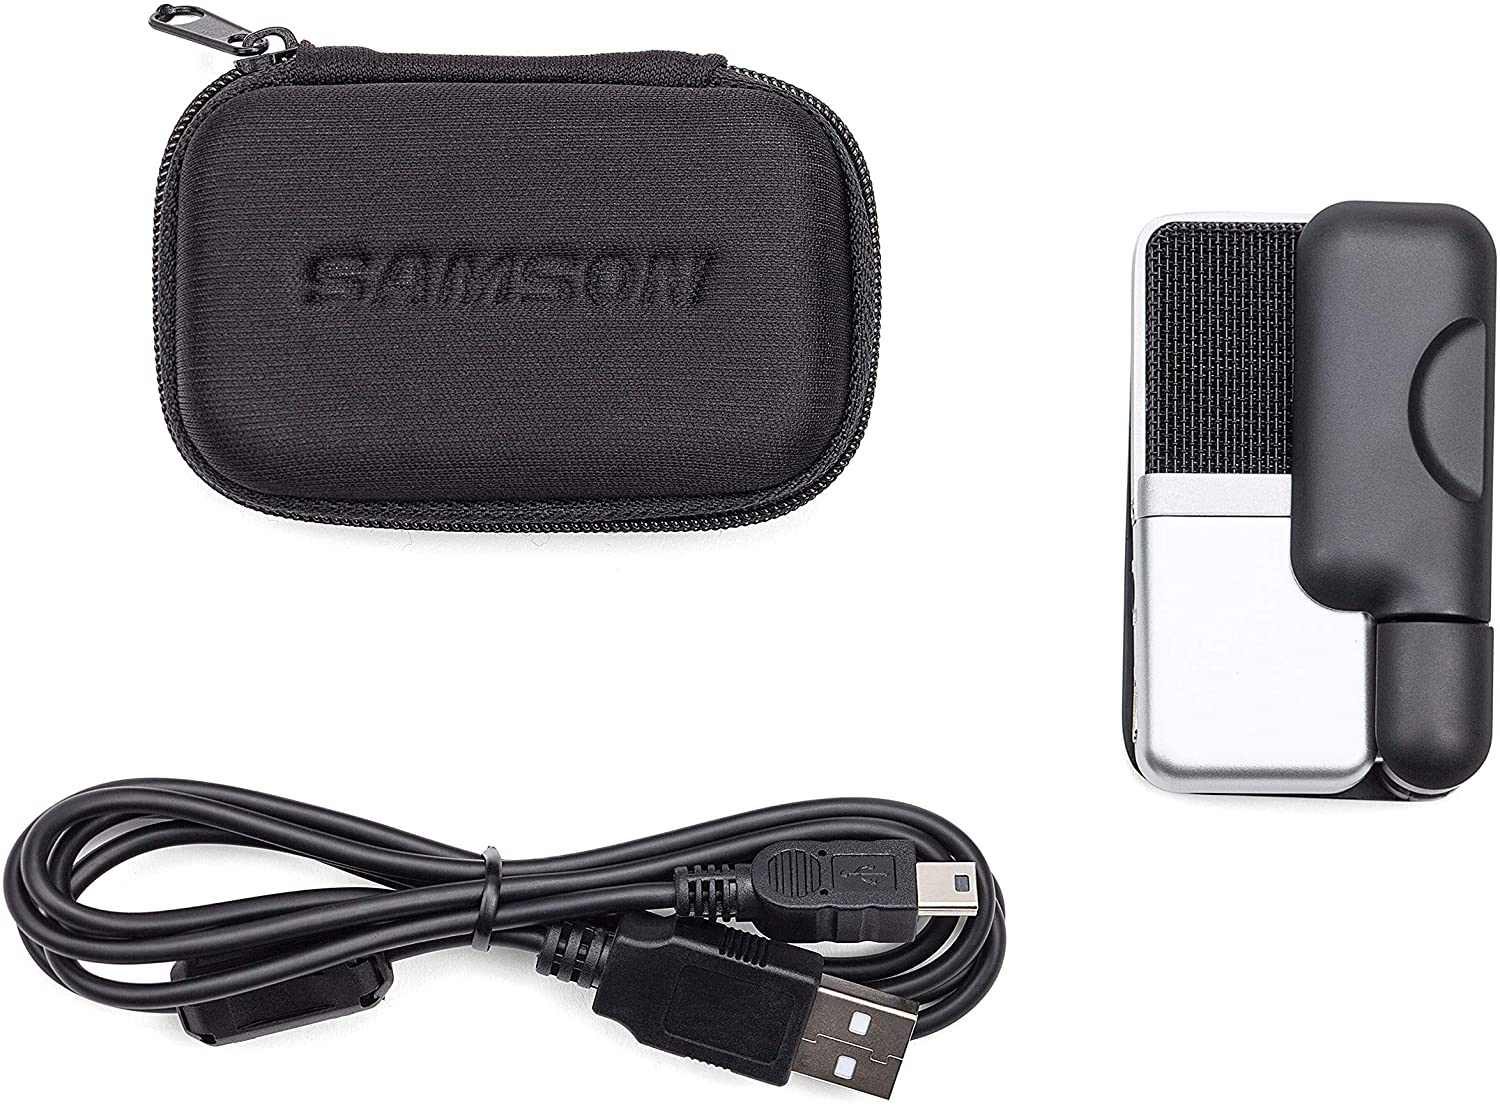 Samson SAGOMIC Go Mic Portable USB Condenser Microphone - Pro-Distributing